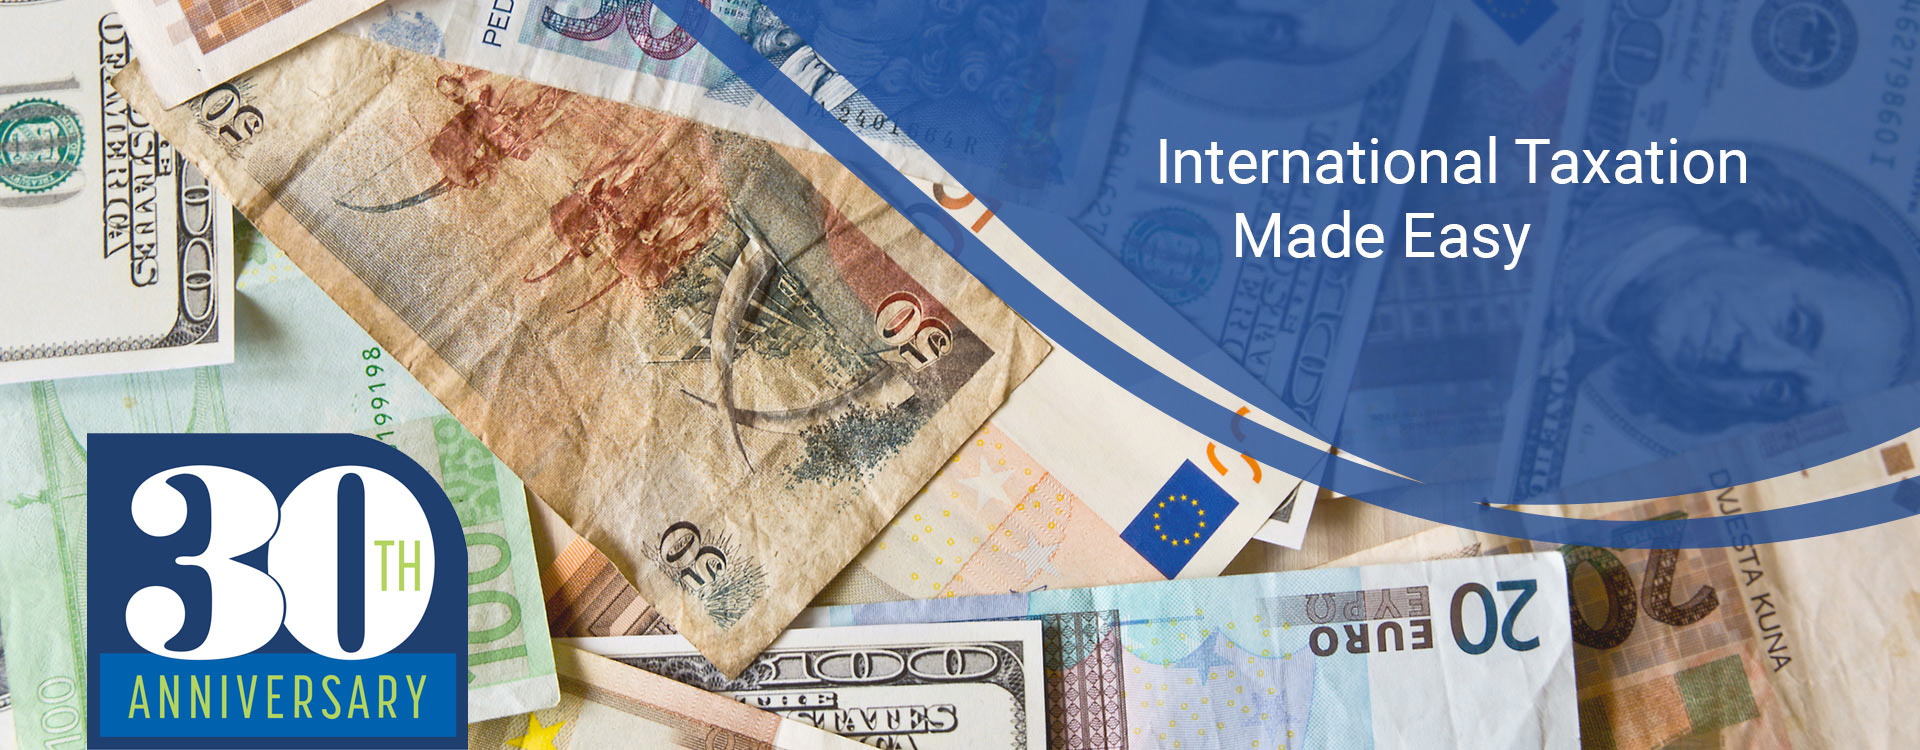 Magone & Company, P.C. International Tax Services